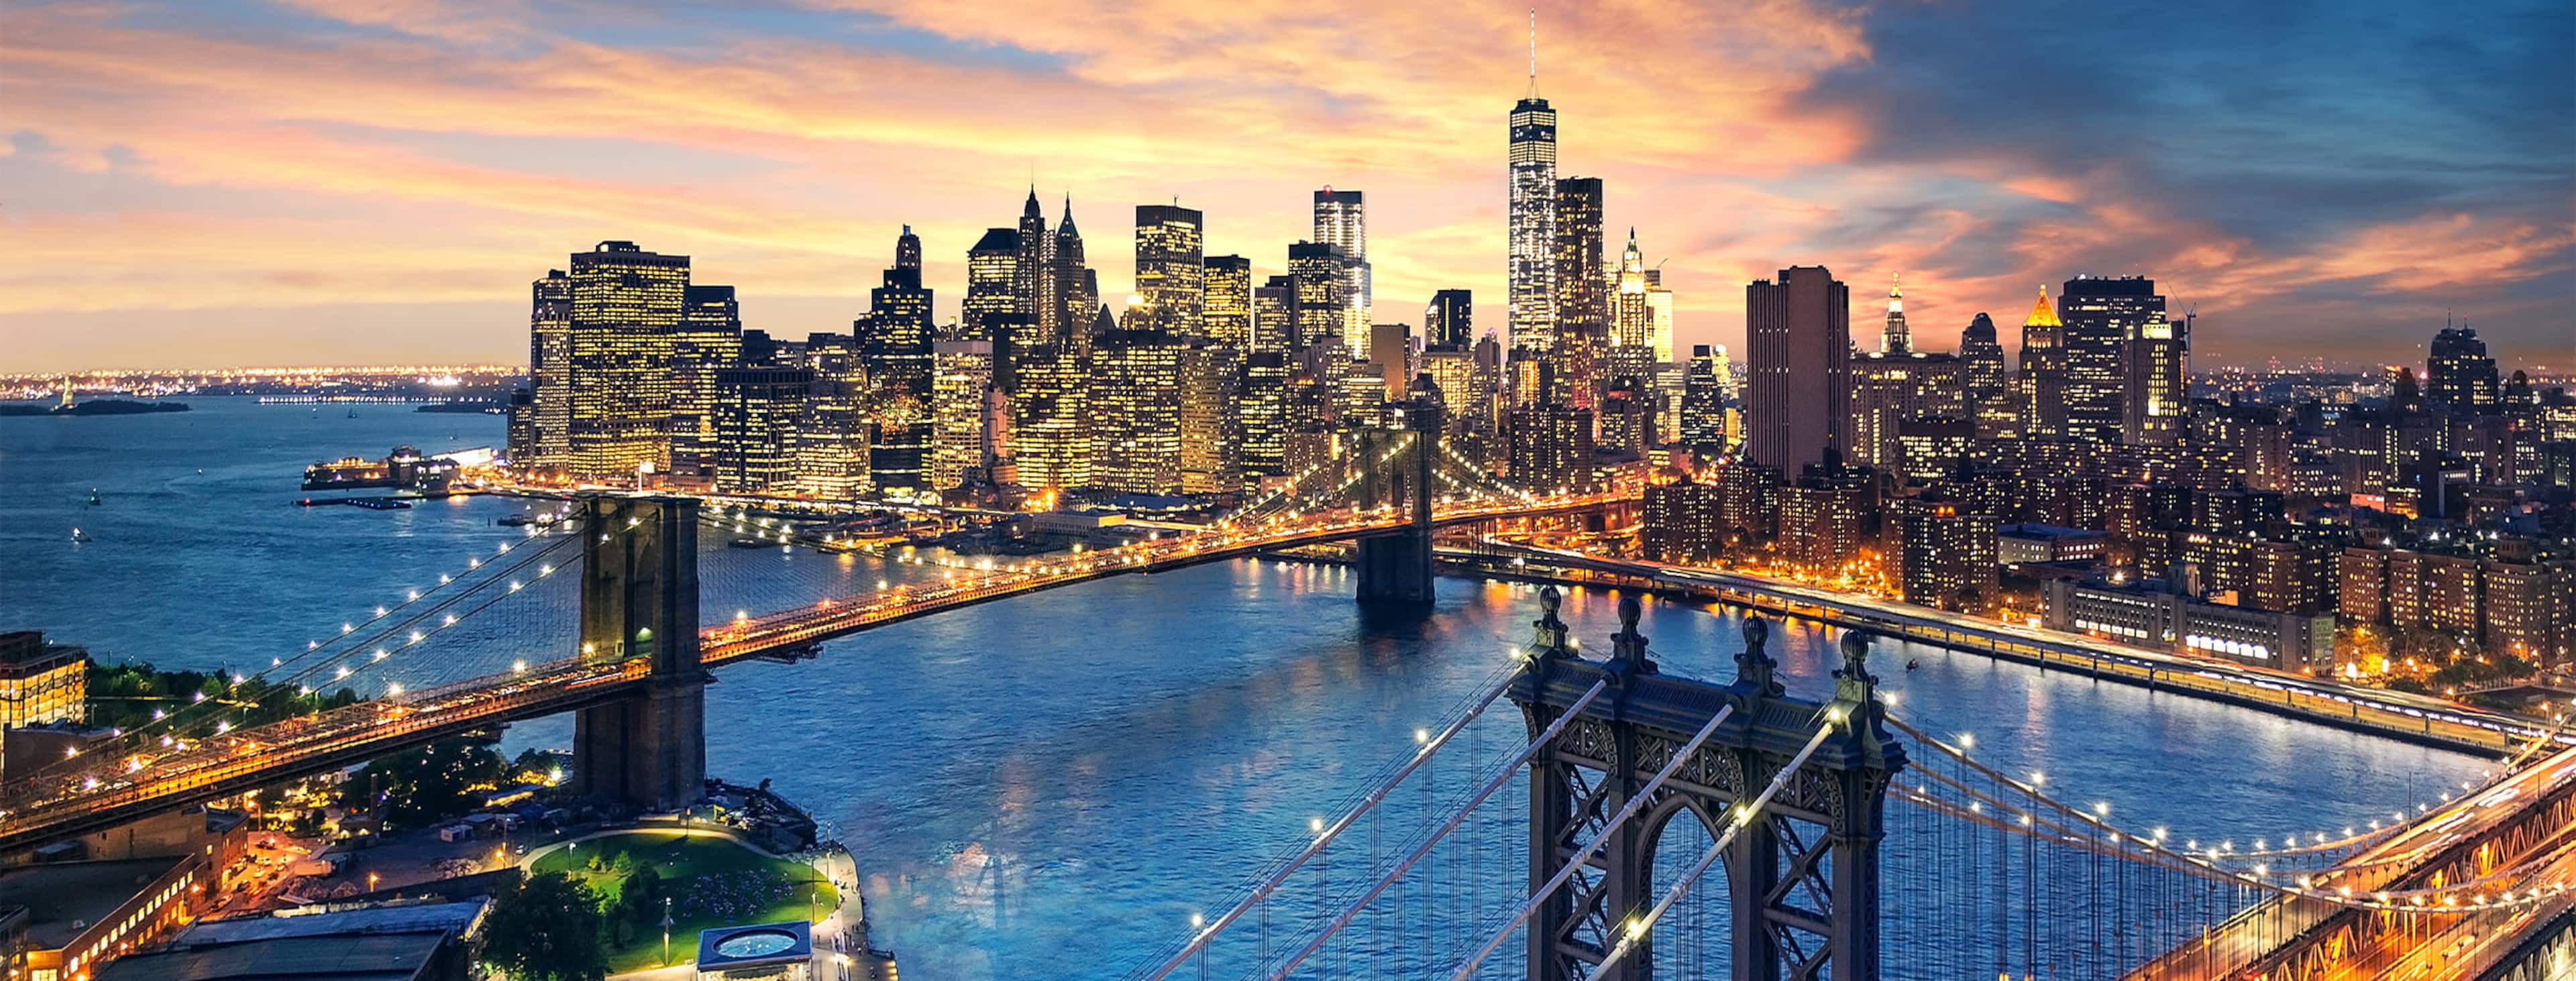 Manhattan and Brooklyn bridges at sunset